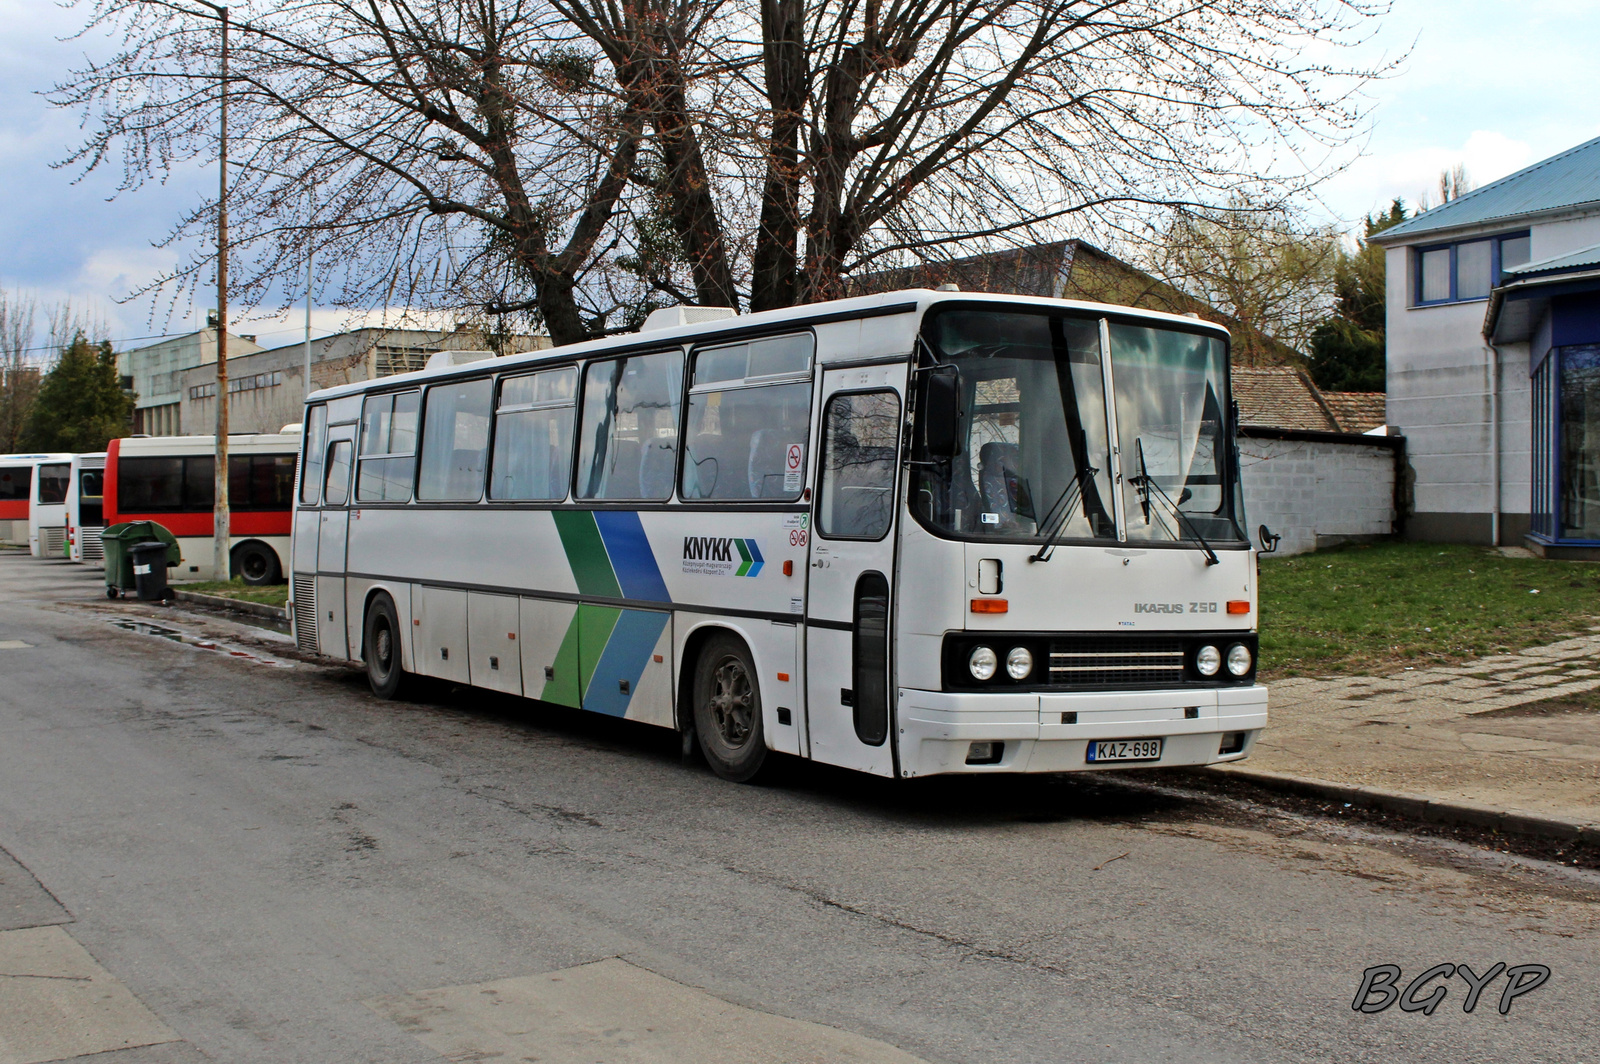 Ikarus 250.68 (KAZ-698)